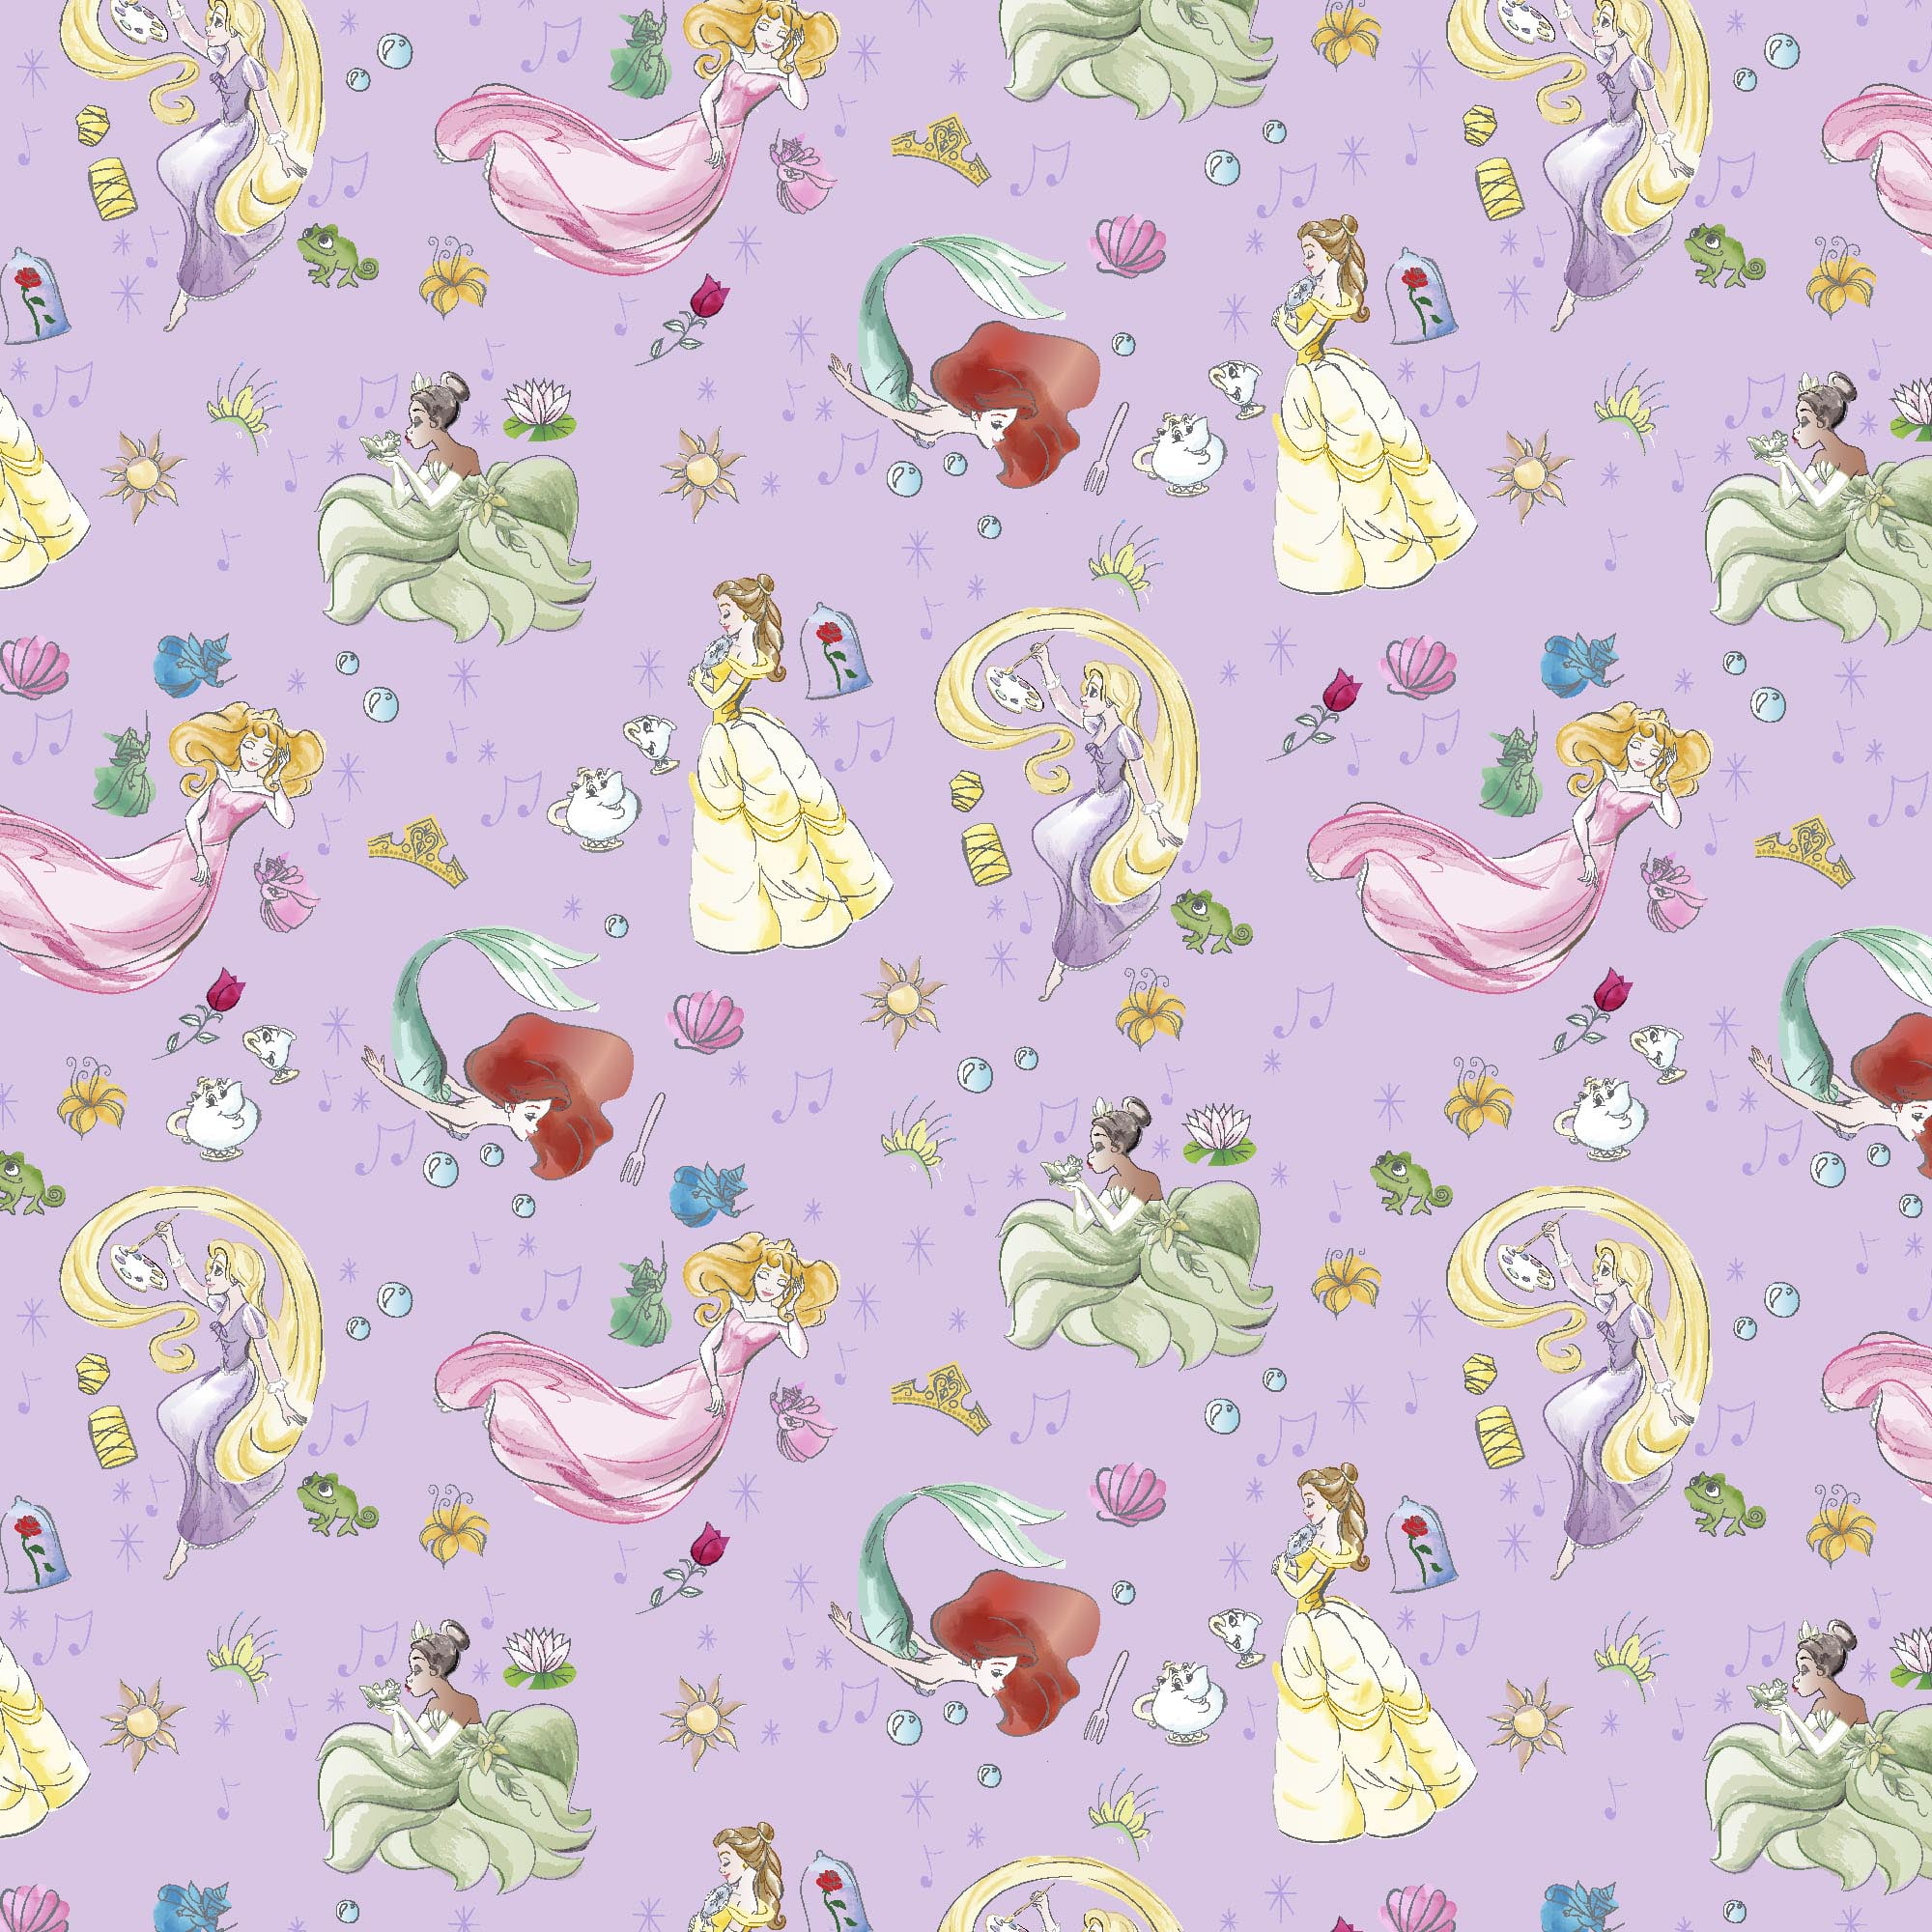 100% Cotton Fabric Disney Inspired Good vs Evil Print Tiana Princess and The Frog 1/4 yard cuts